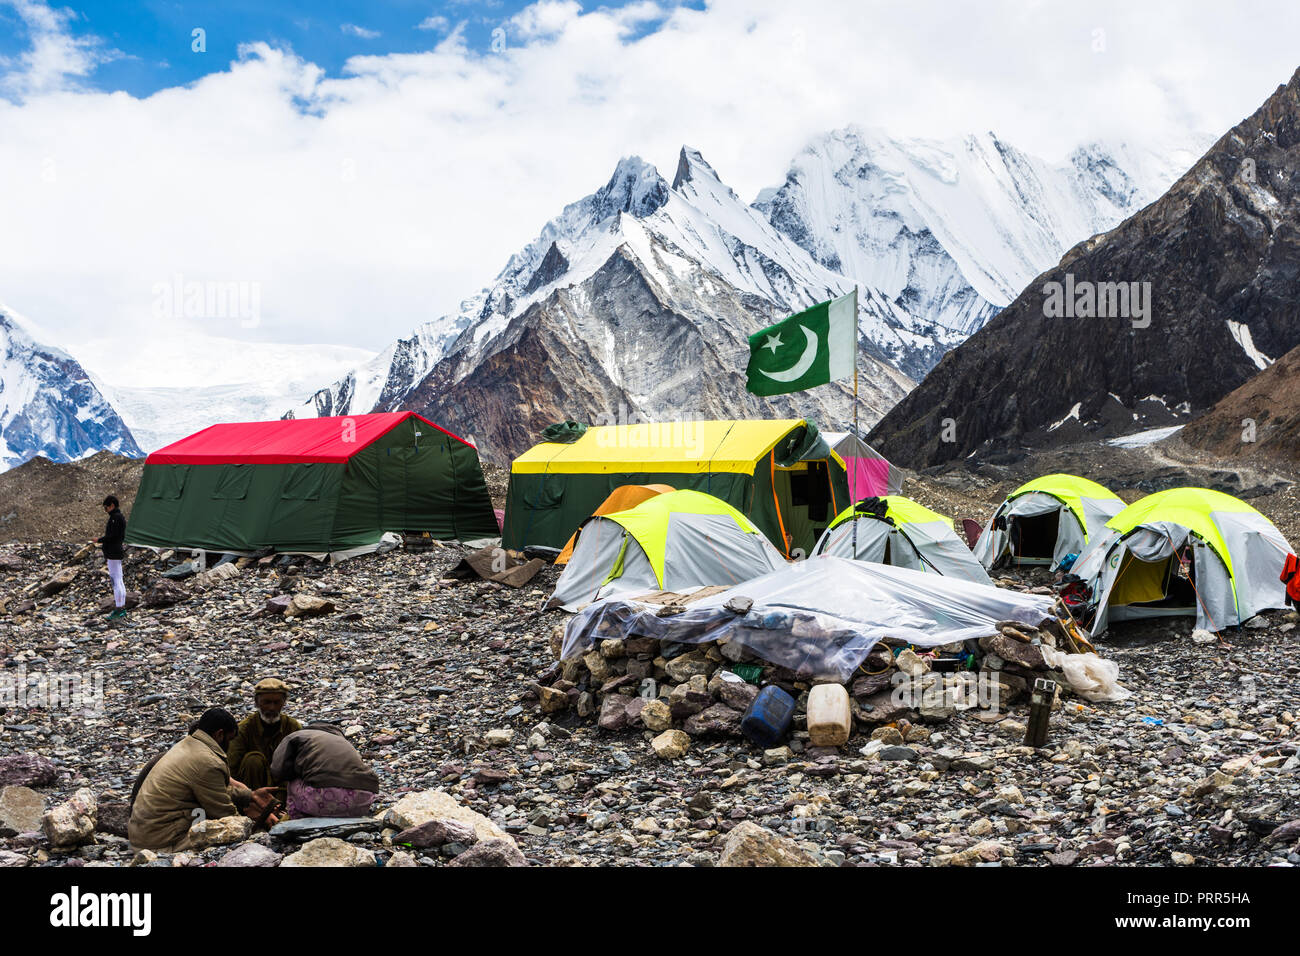 Pakistani flag in Concordia campsite with Kumul Gri (Vigne peaks) and Kondus peak in the background, Baltoro glacier, Pakistan Stock Photo